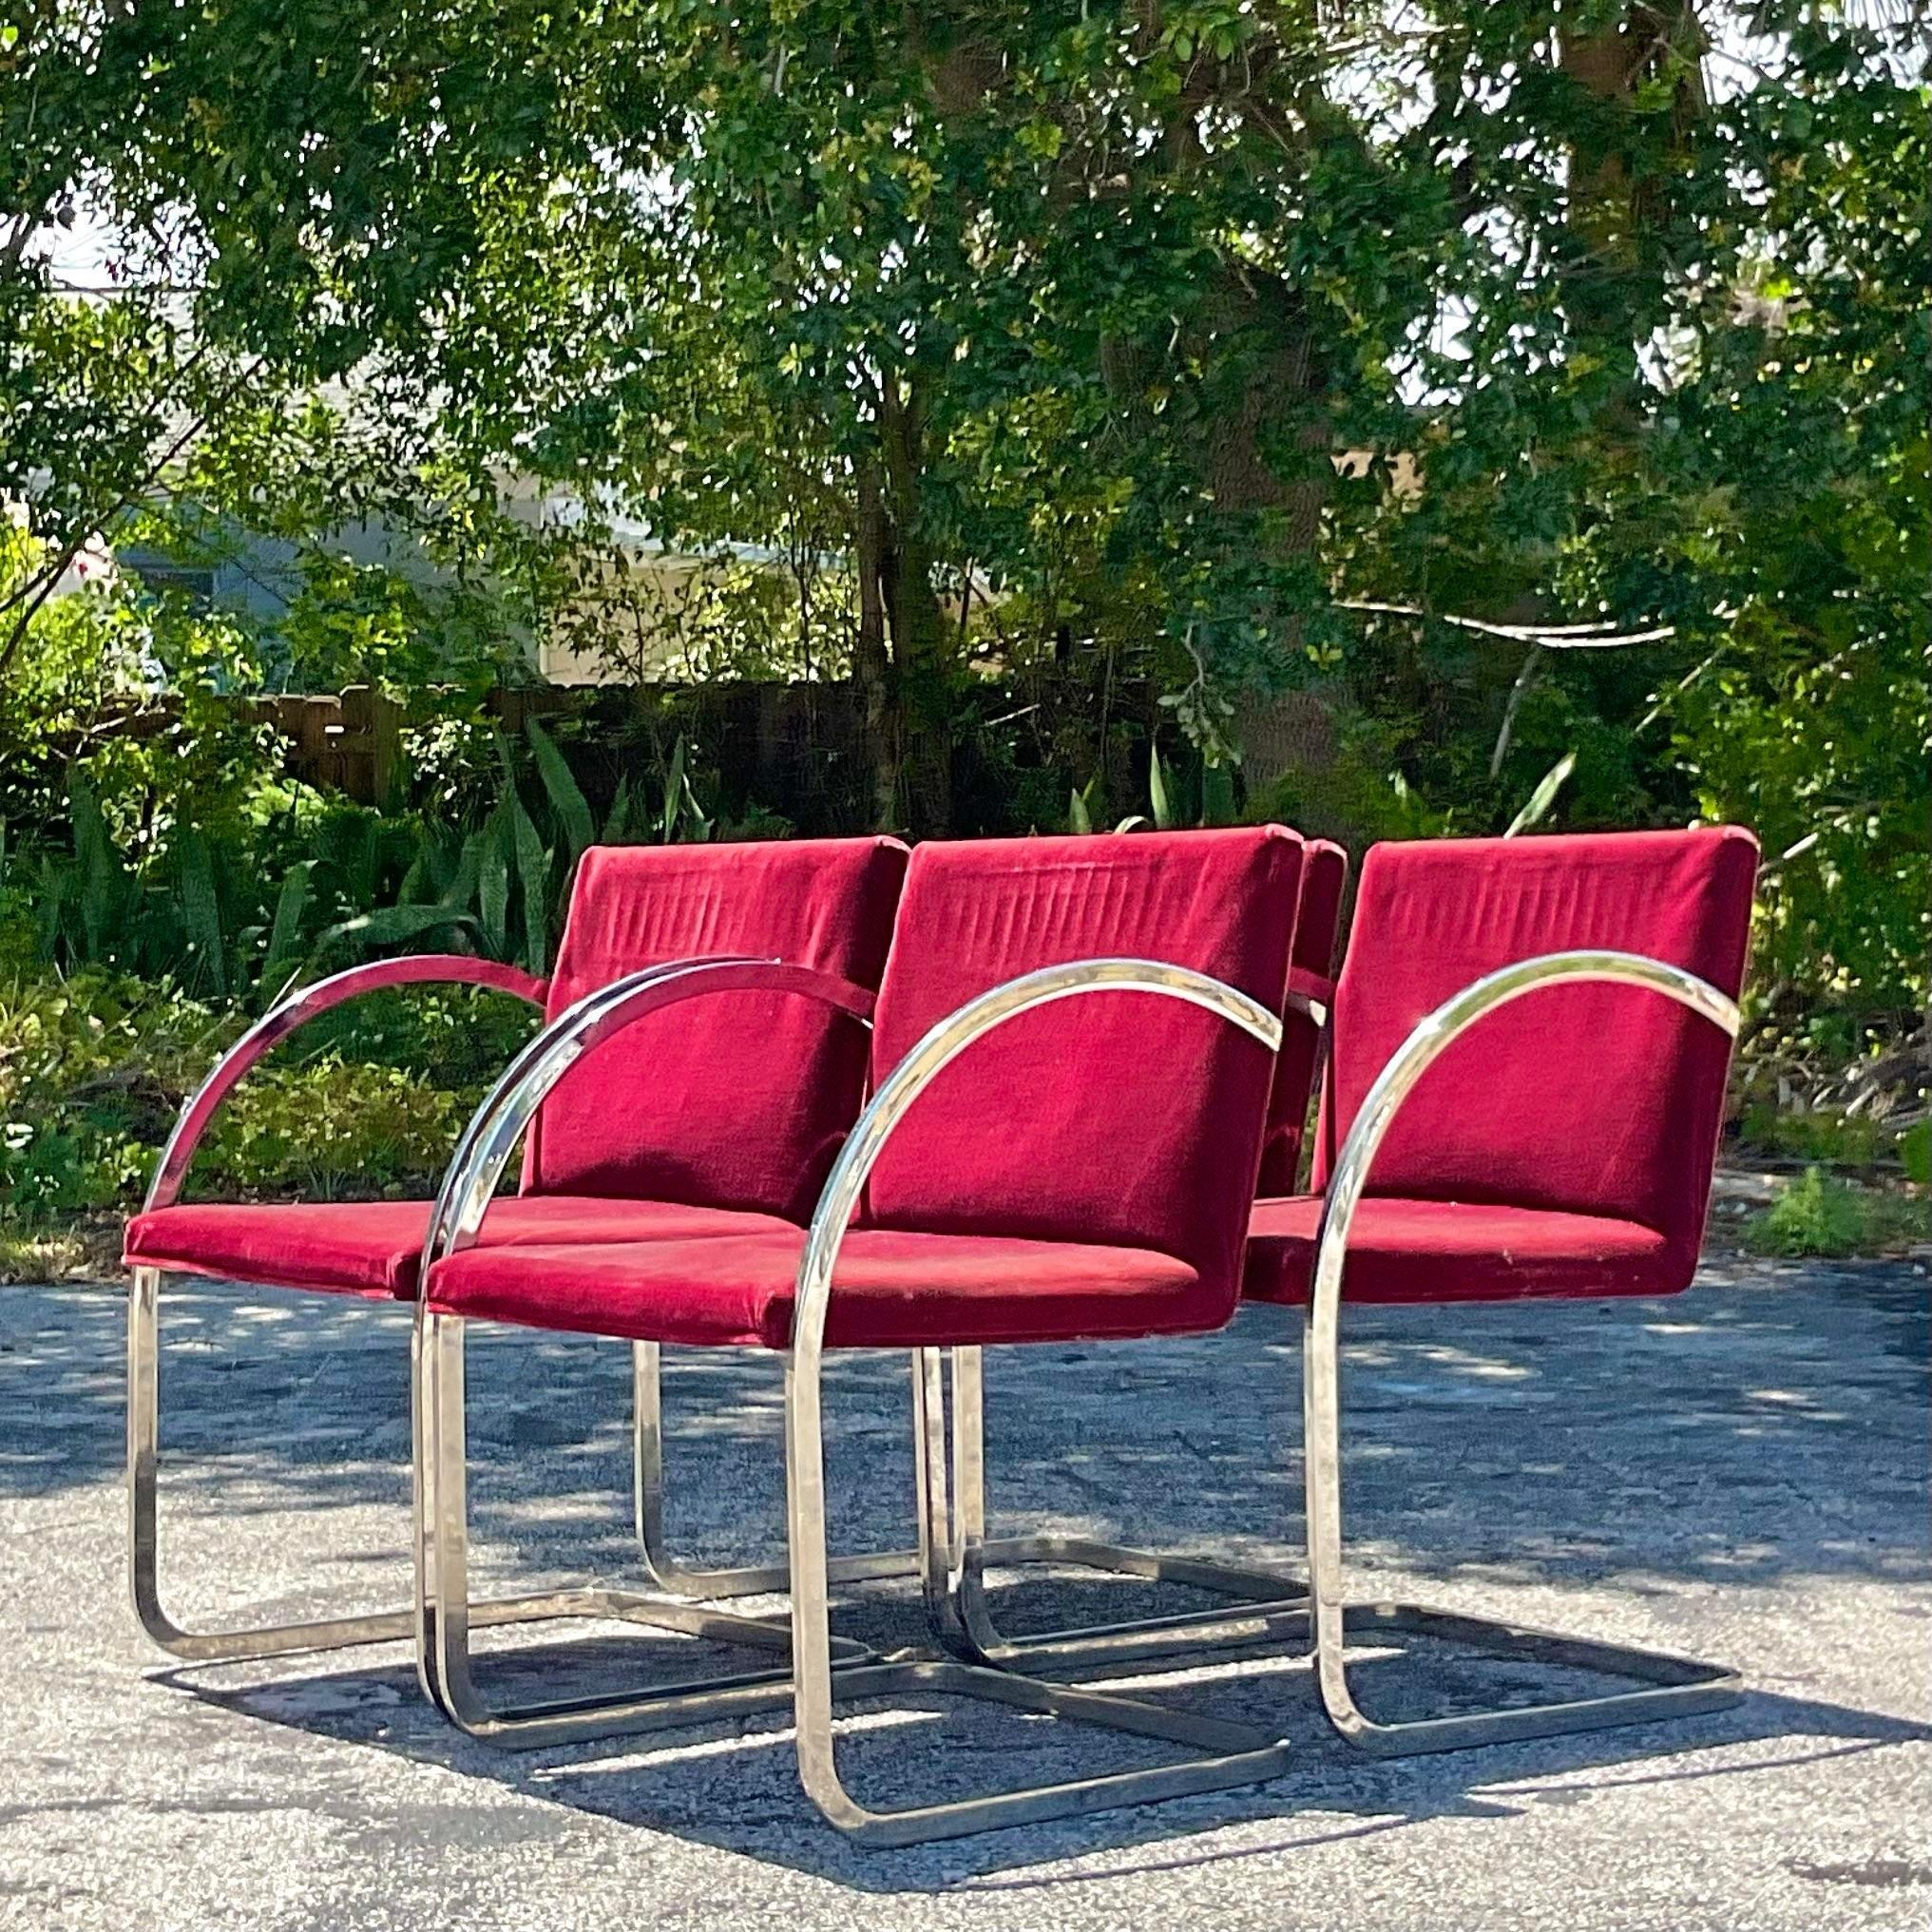 American Vintage Boho Brueton Polished Chrome Dining Chairs - Set of 4 For Sale